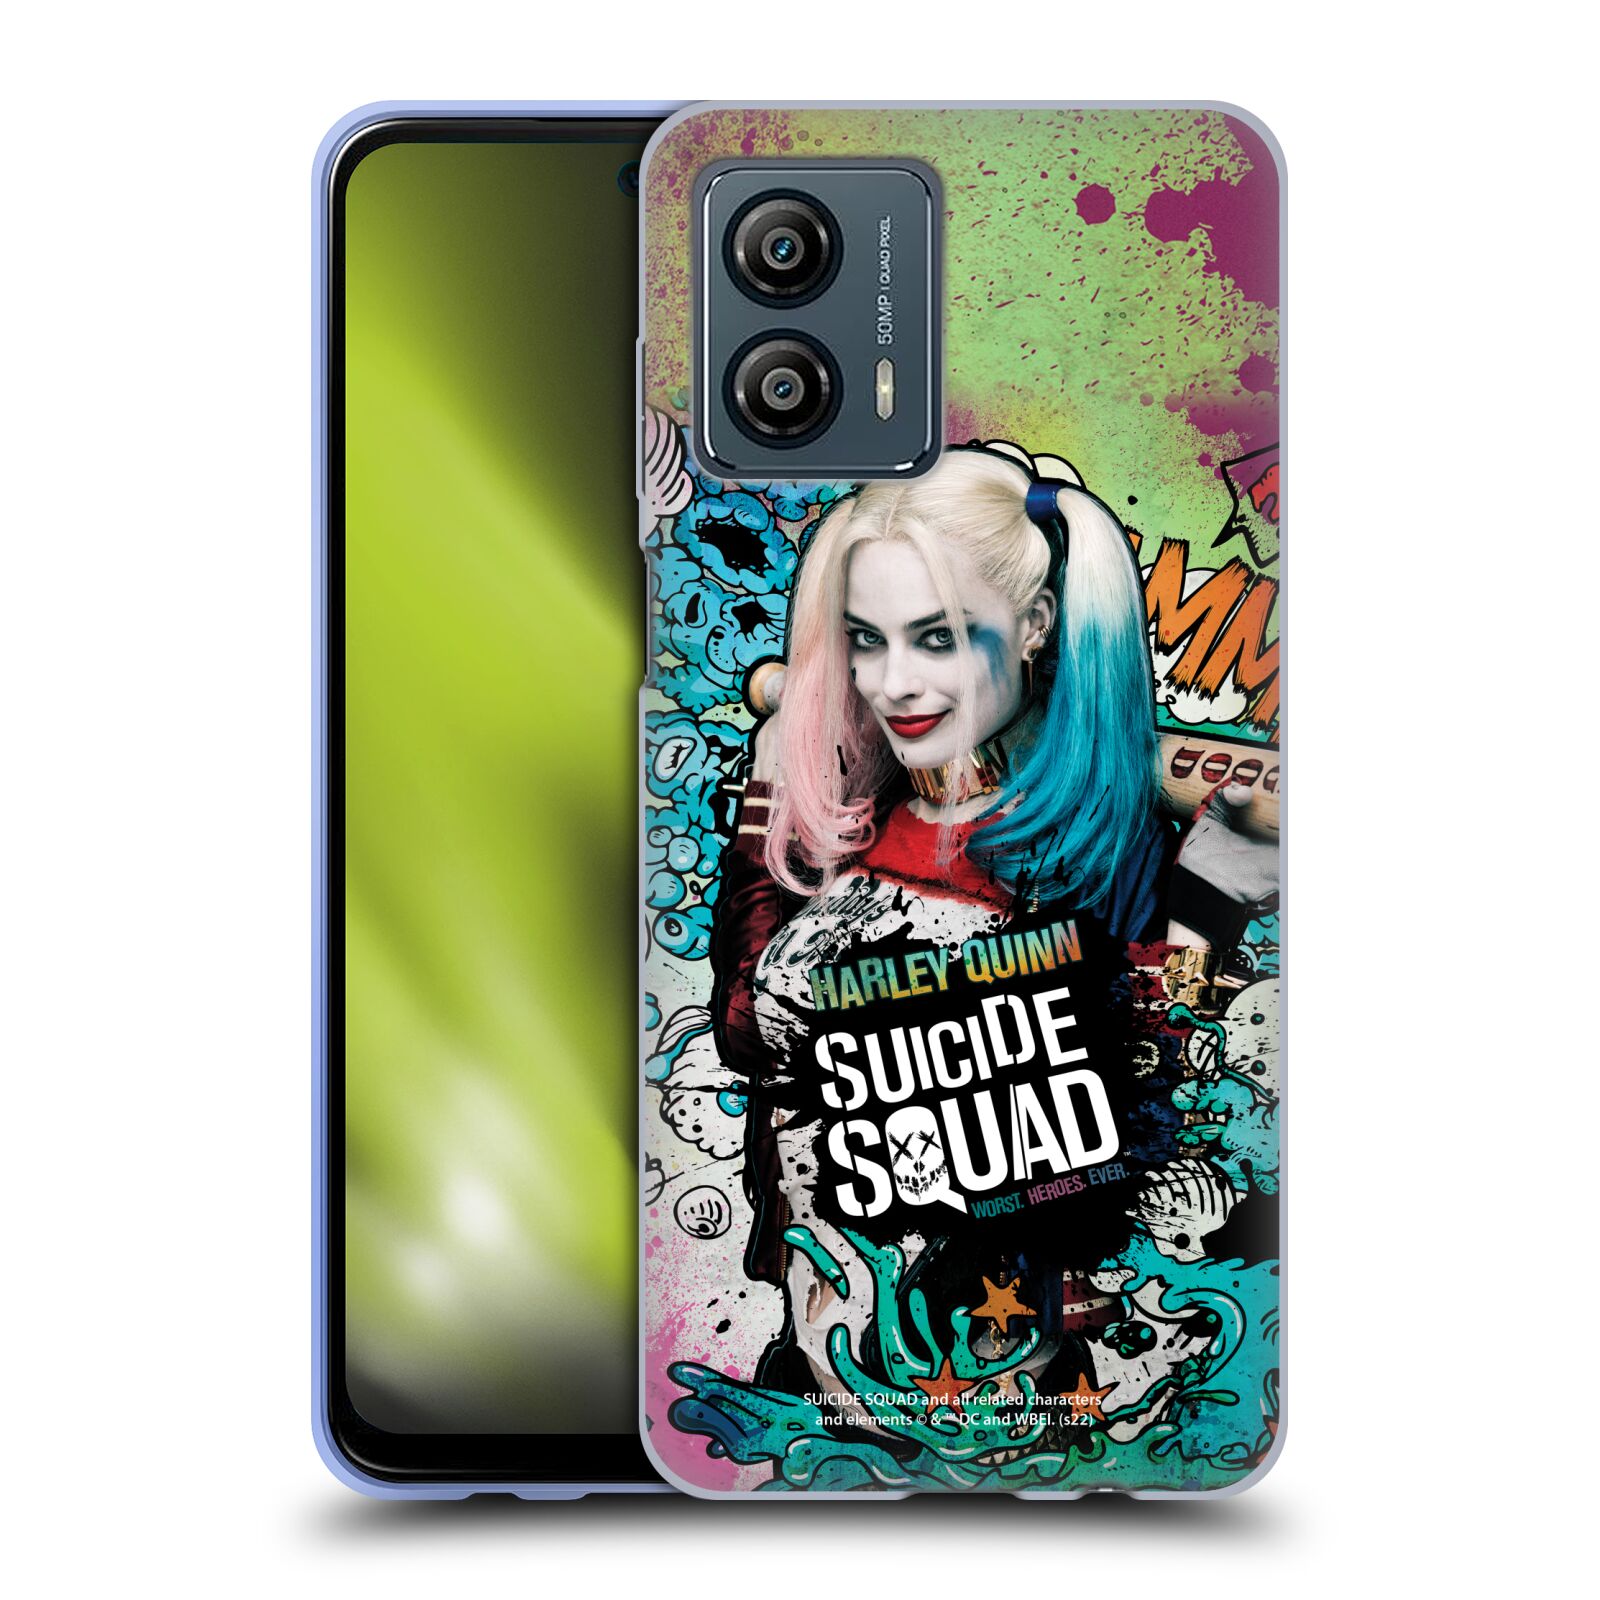 Silikonové pouzdro na mobil Motorola Moto G53 5G - Suicide Squad - Harley Quinn (Silikonový kryt, obal, pouzdro na mobilní telefon Motorola Moto G53 5G s licencovaným motivem Suicide Squad - Harley Quinn)